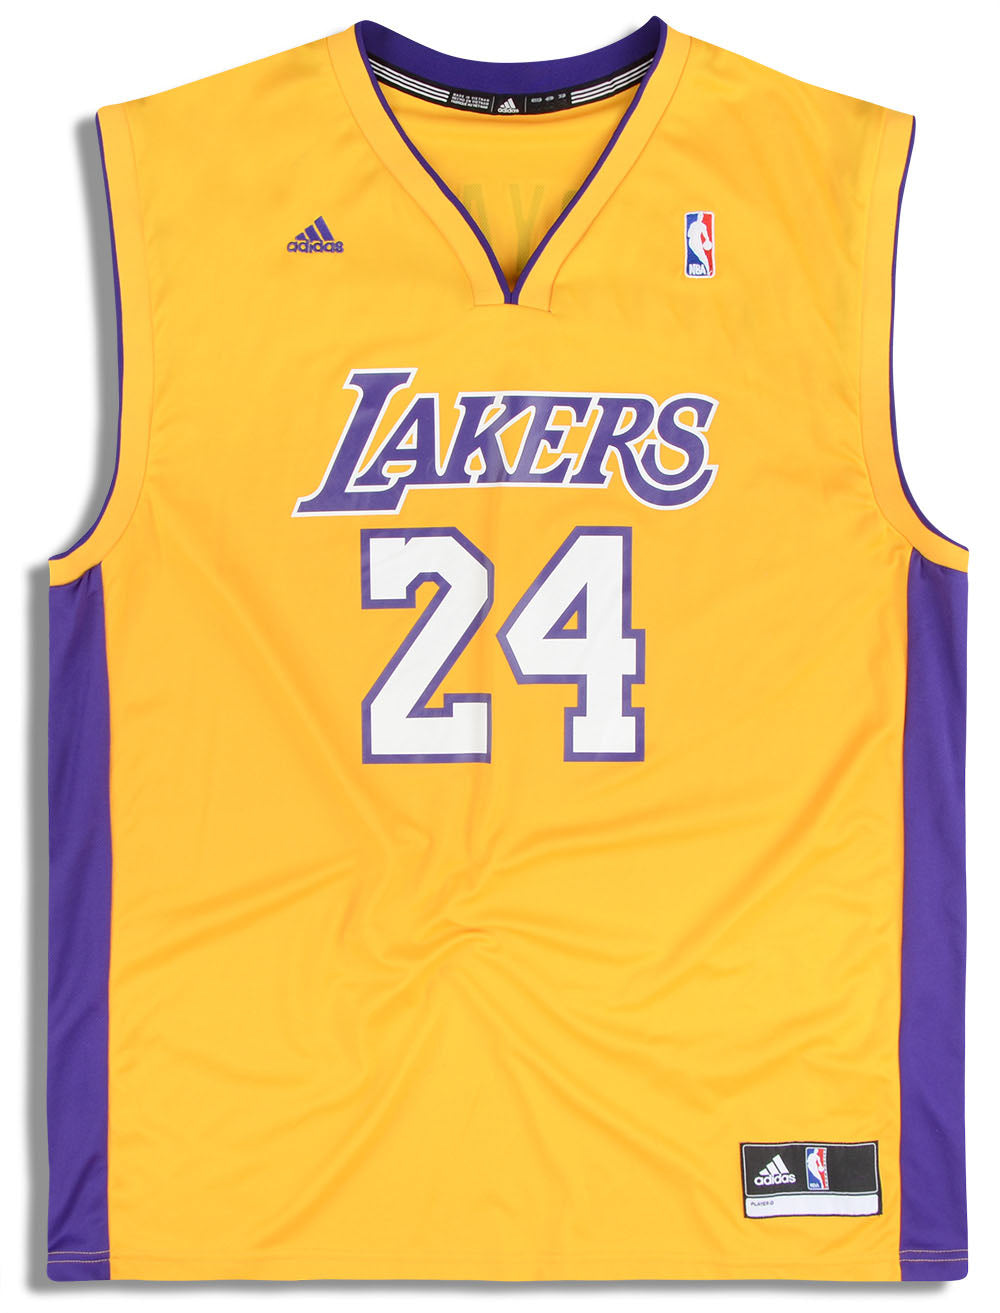 Adidas Kobe Bryant 2010 NBA Finals jersey legit check : r/basketballjerseys